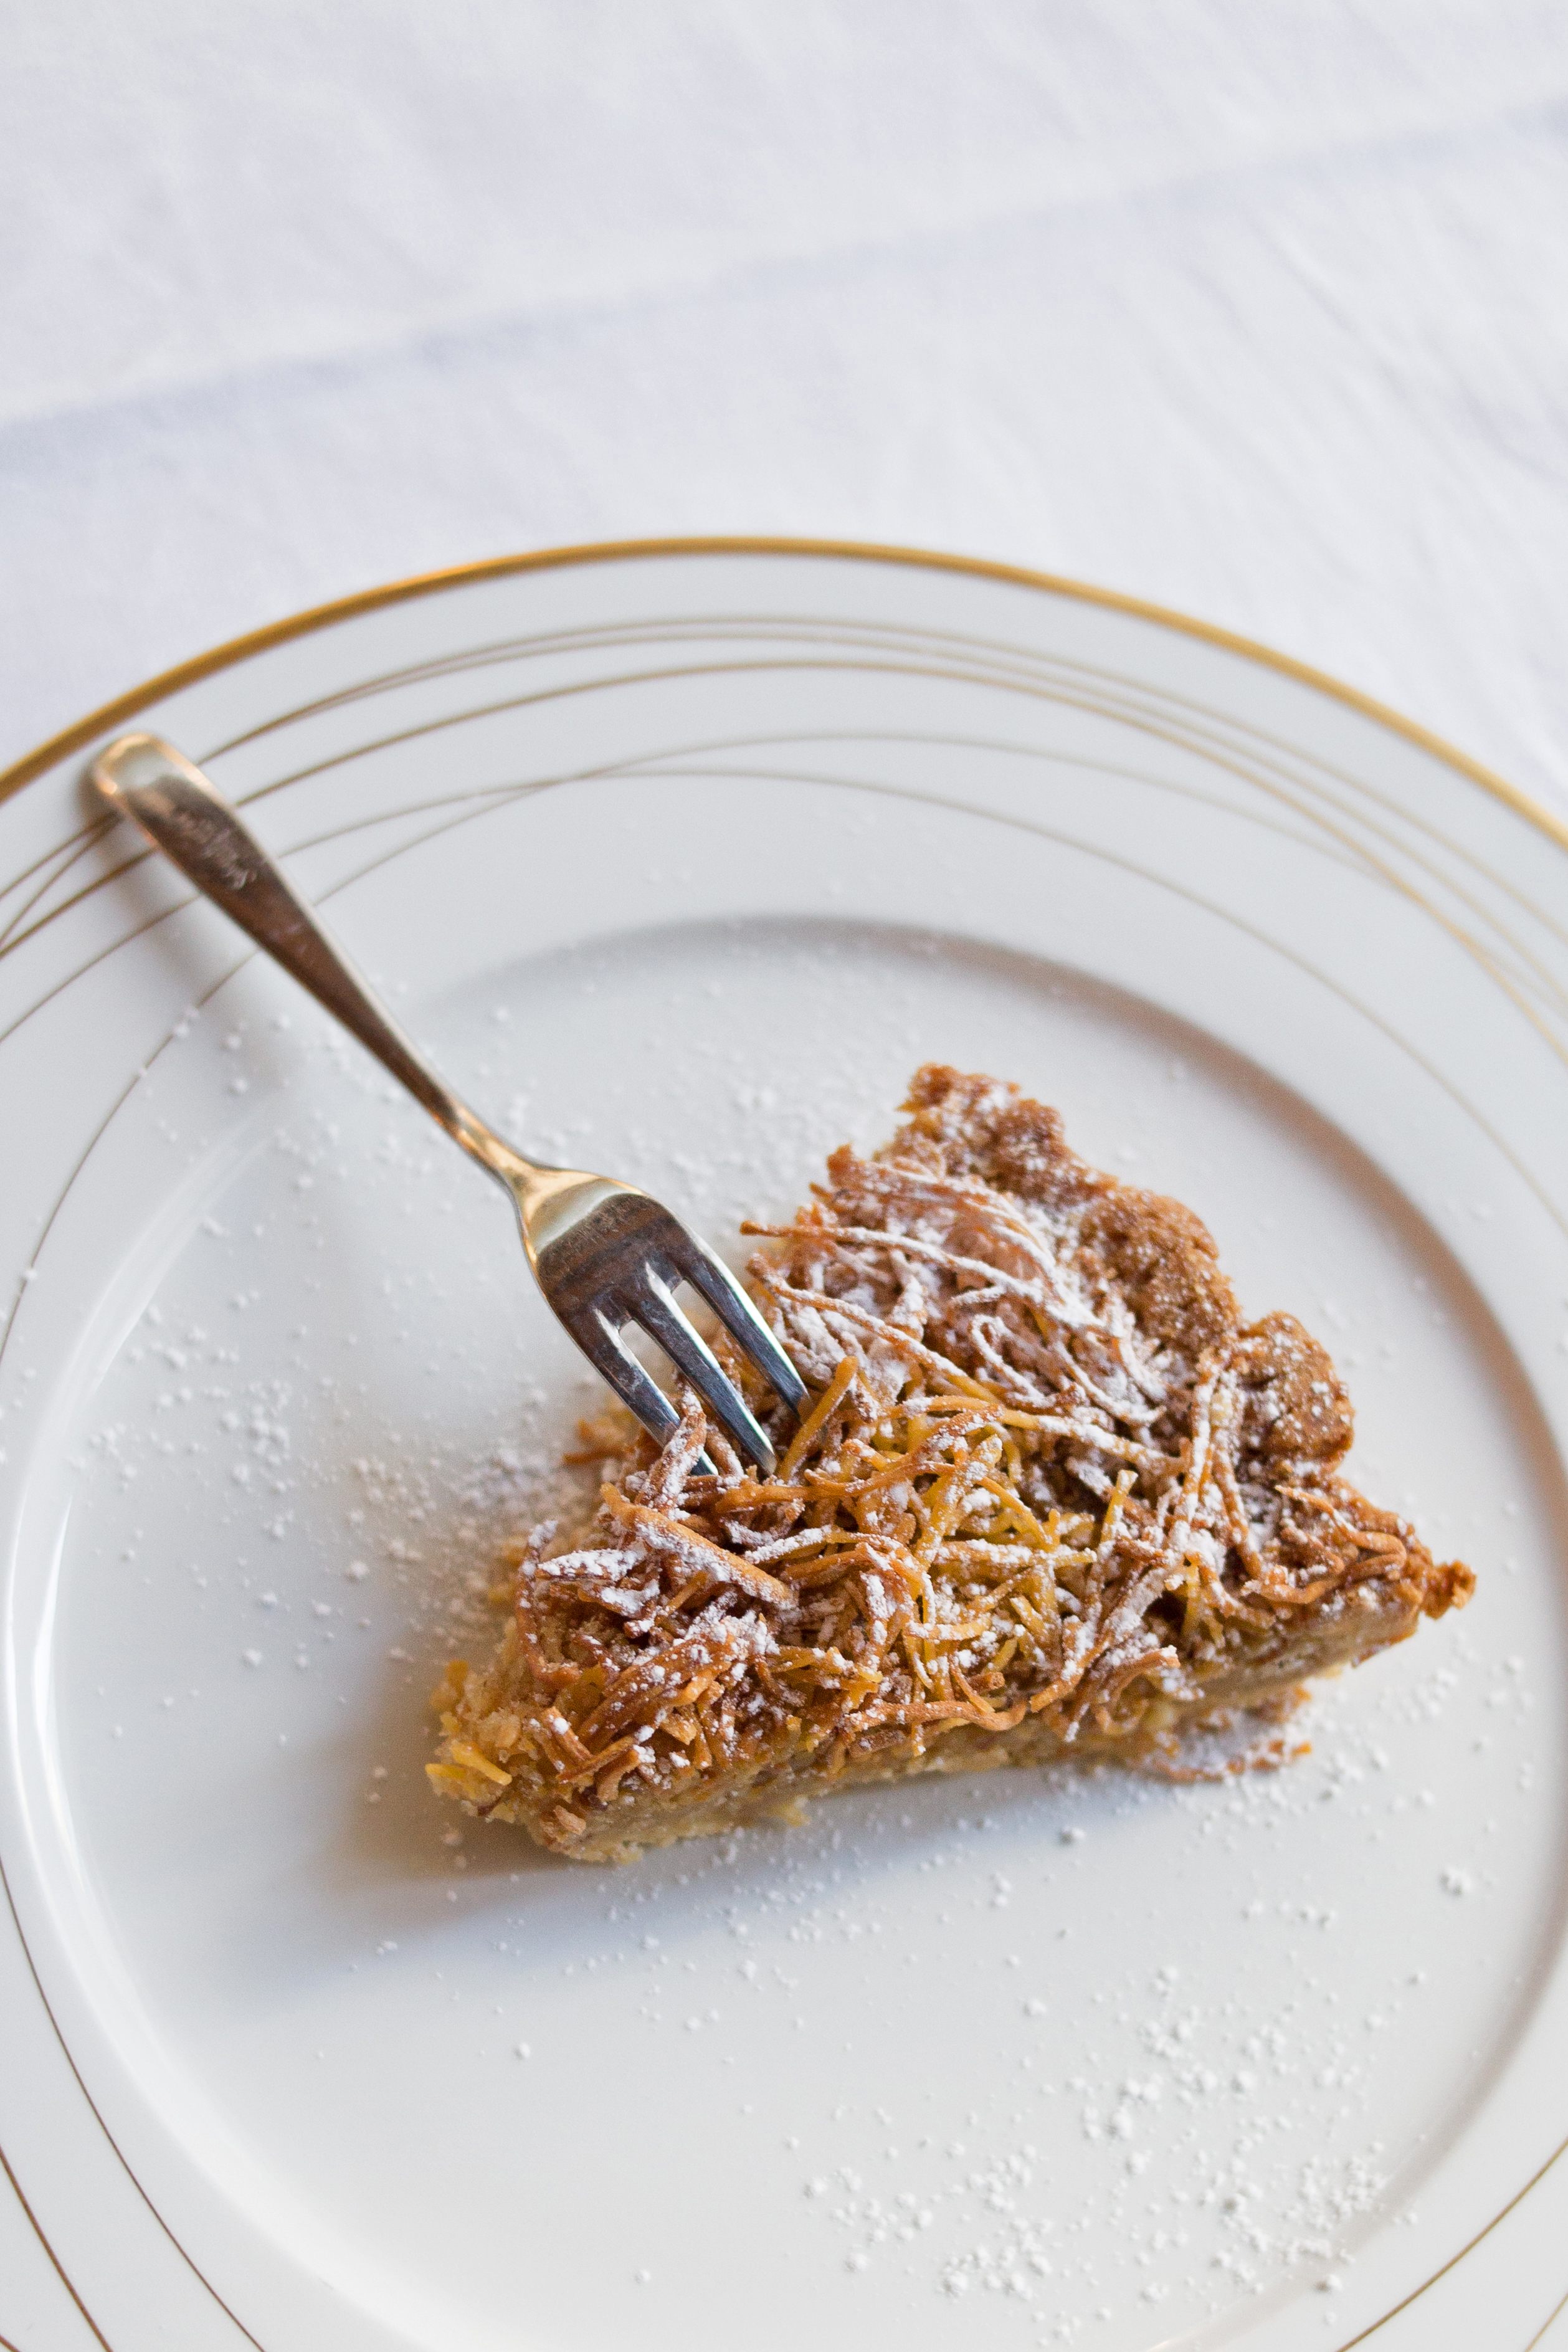 Torta di tagliatelle, dessert that honors Lucrezia Borgia’s iconic hair, from Trattoria da Noemi. 